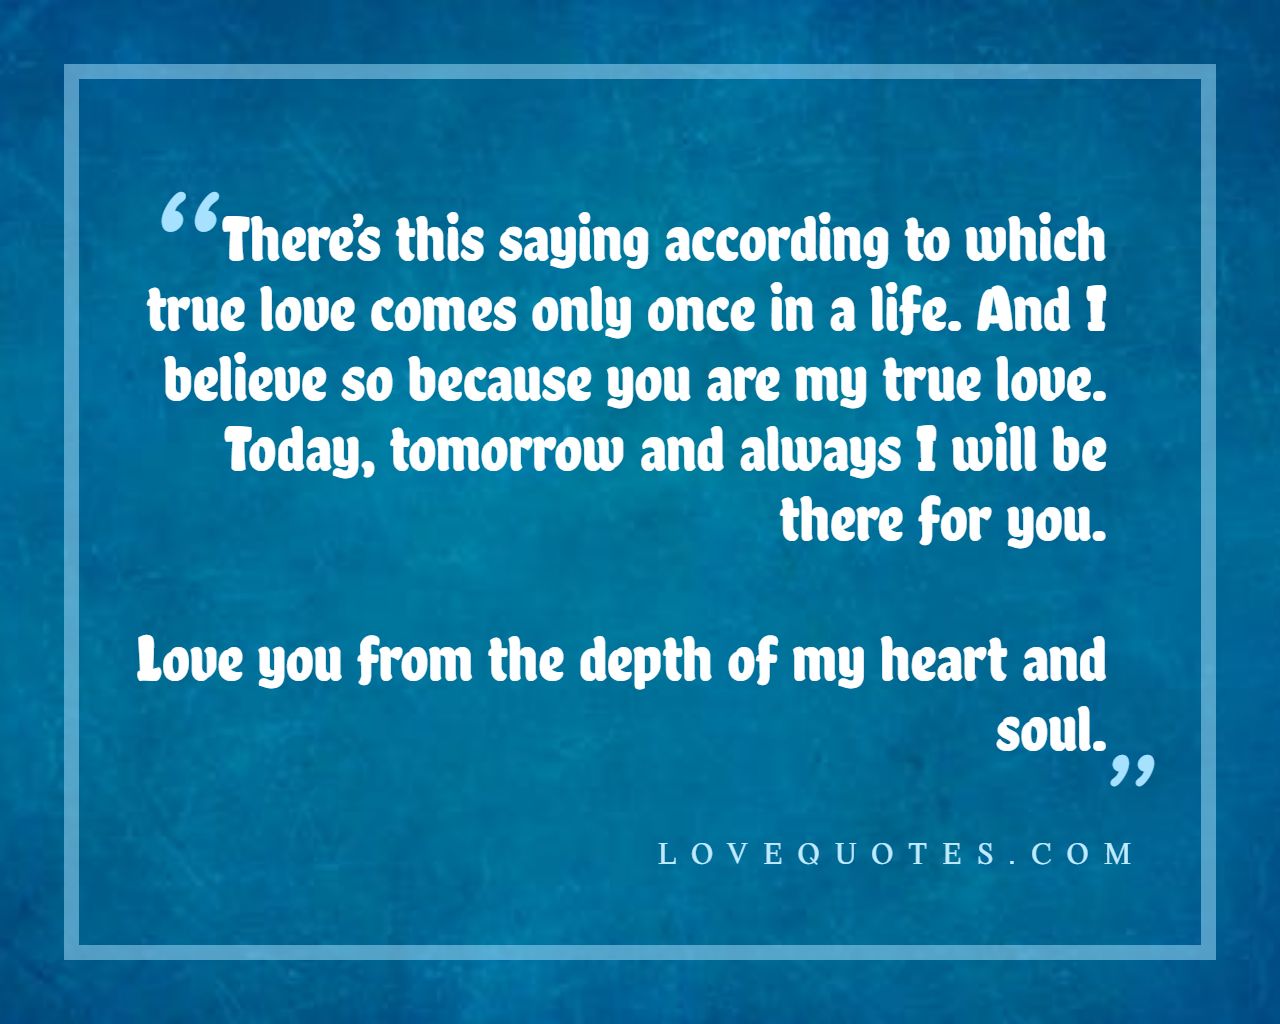 My True Love - Love Quotes